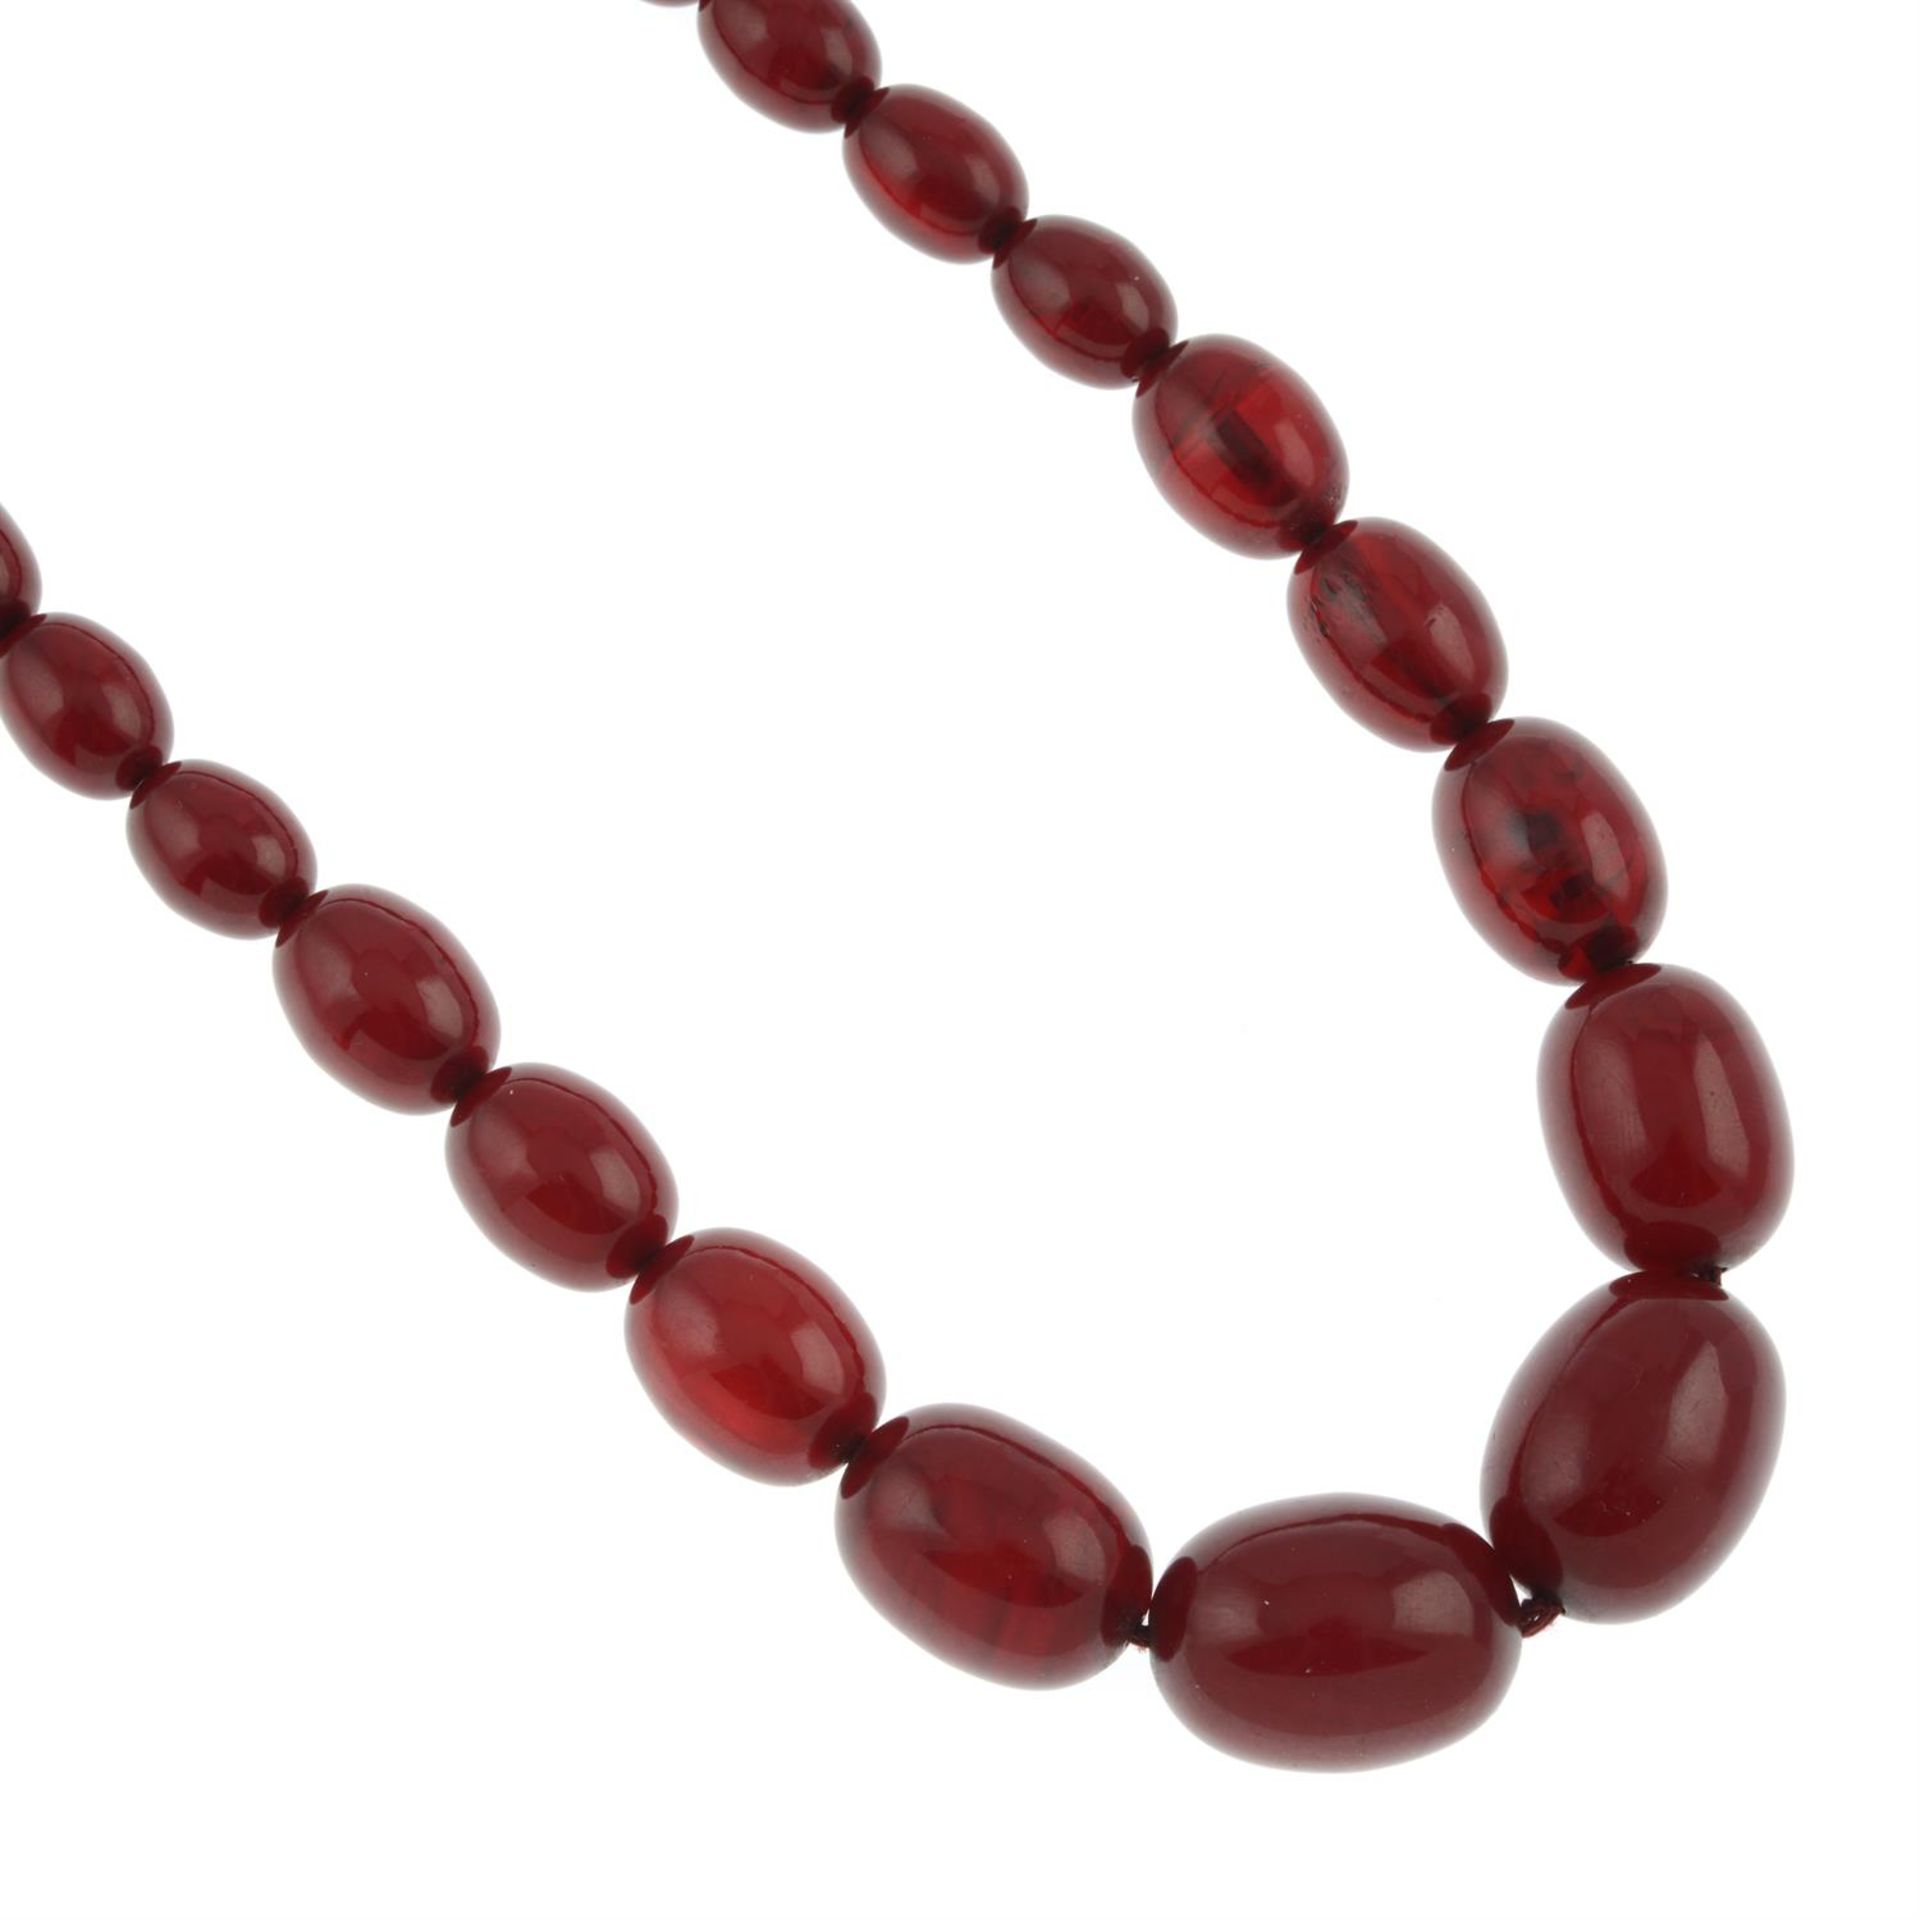 Graduated bakelite bead necklace - Image 2 of 2